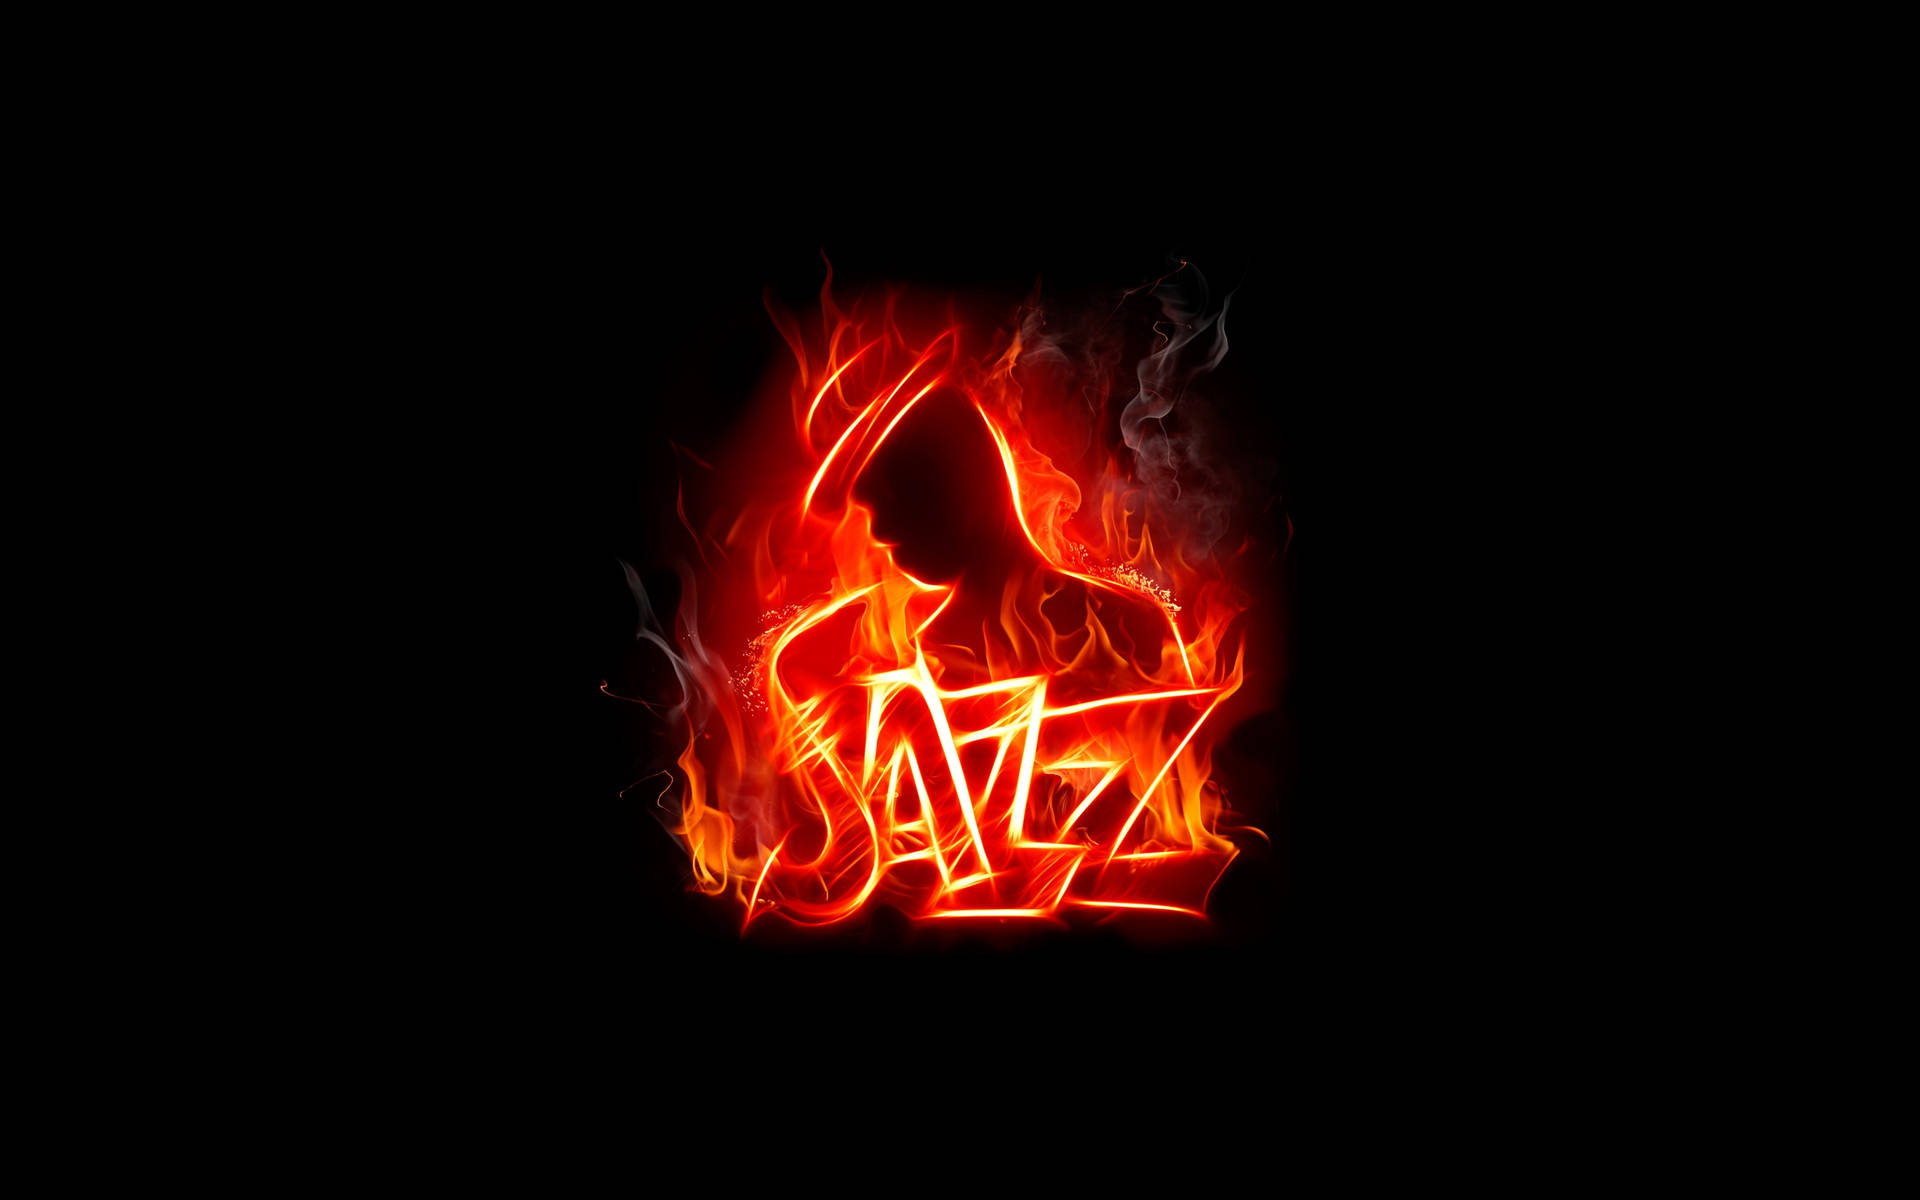 Jazz On Fire